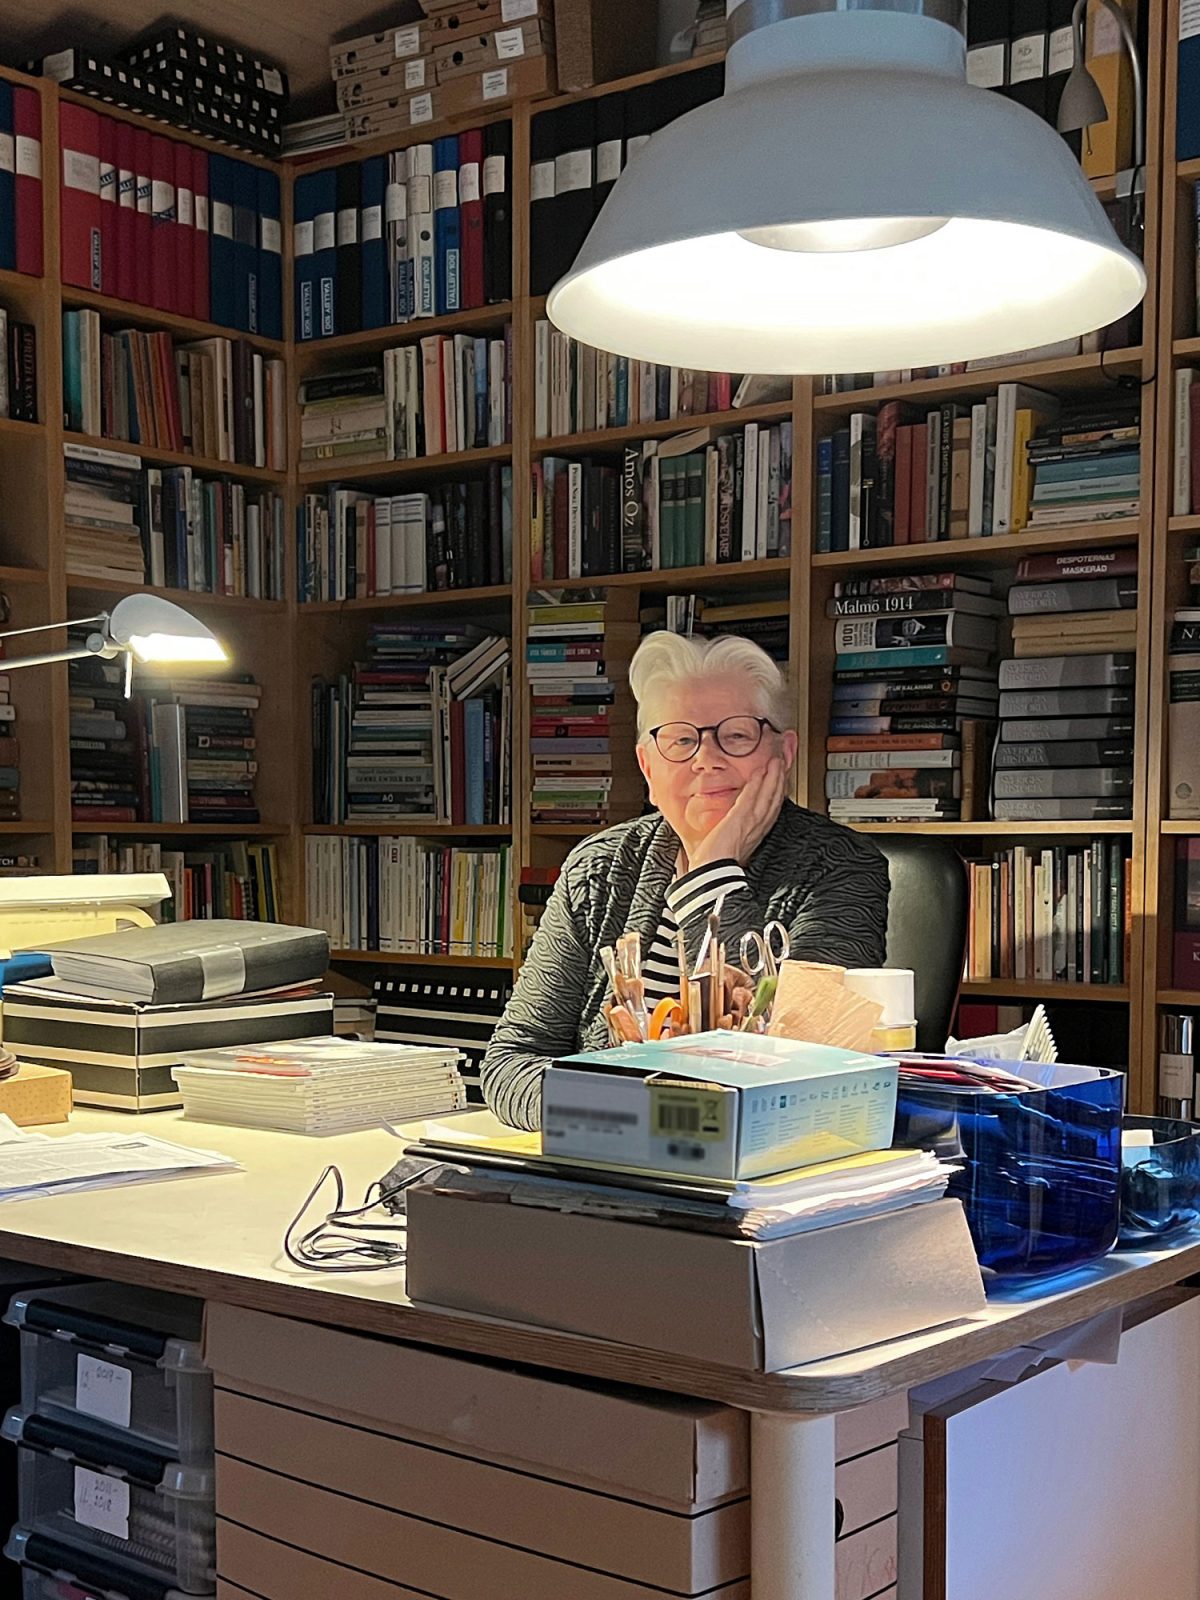 Elderly white-haired woman, Vivianne Sjölin, behind a desk in a cluttered workspace.